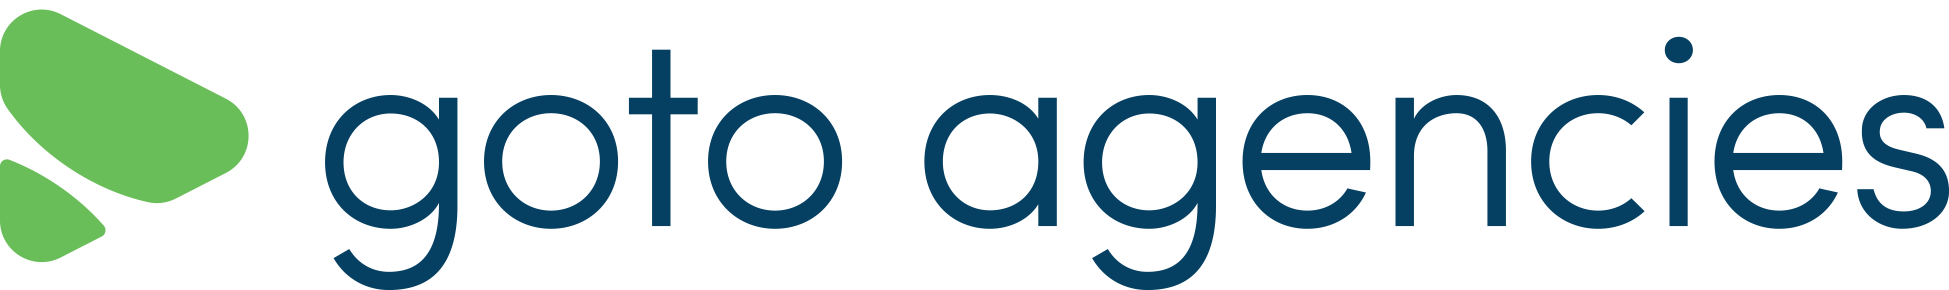 logo_gotoagencies